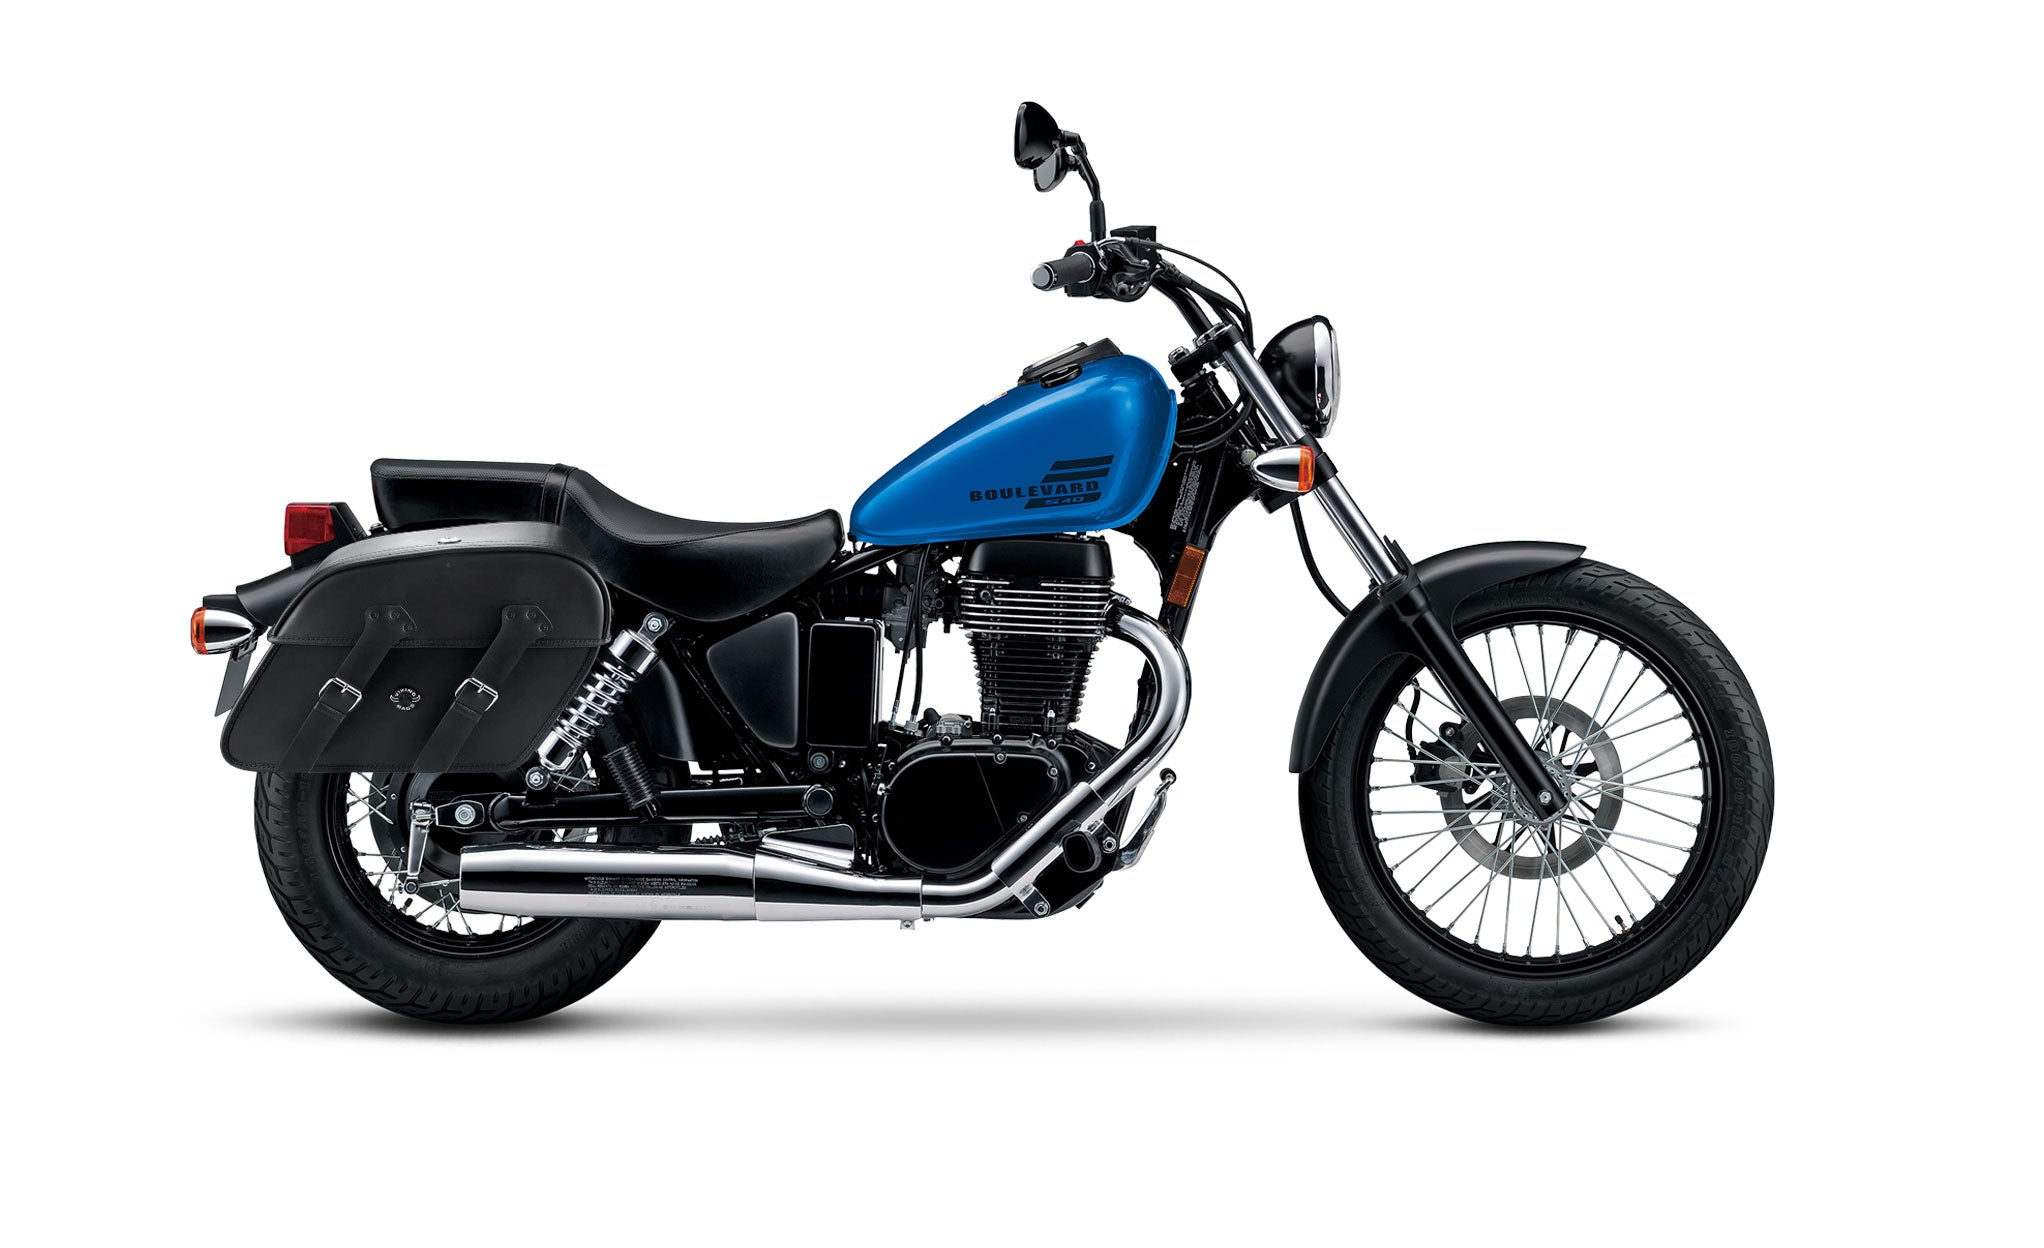 Viking Raven Extra Large Suzuki Boulevard S40 Savage Ls650 Leather Motorcycle Saddlebags on Bike Photo @expand